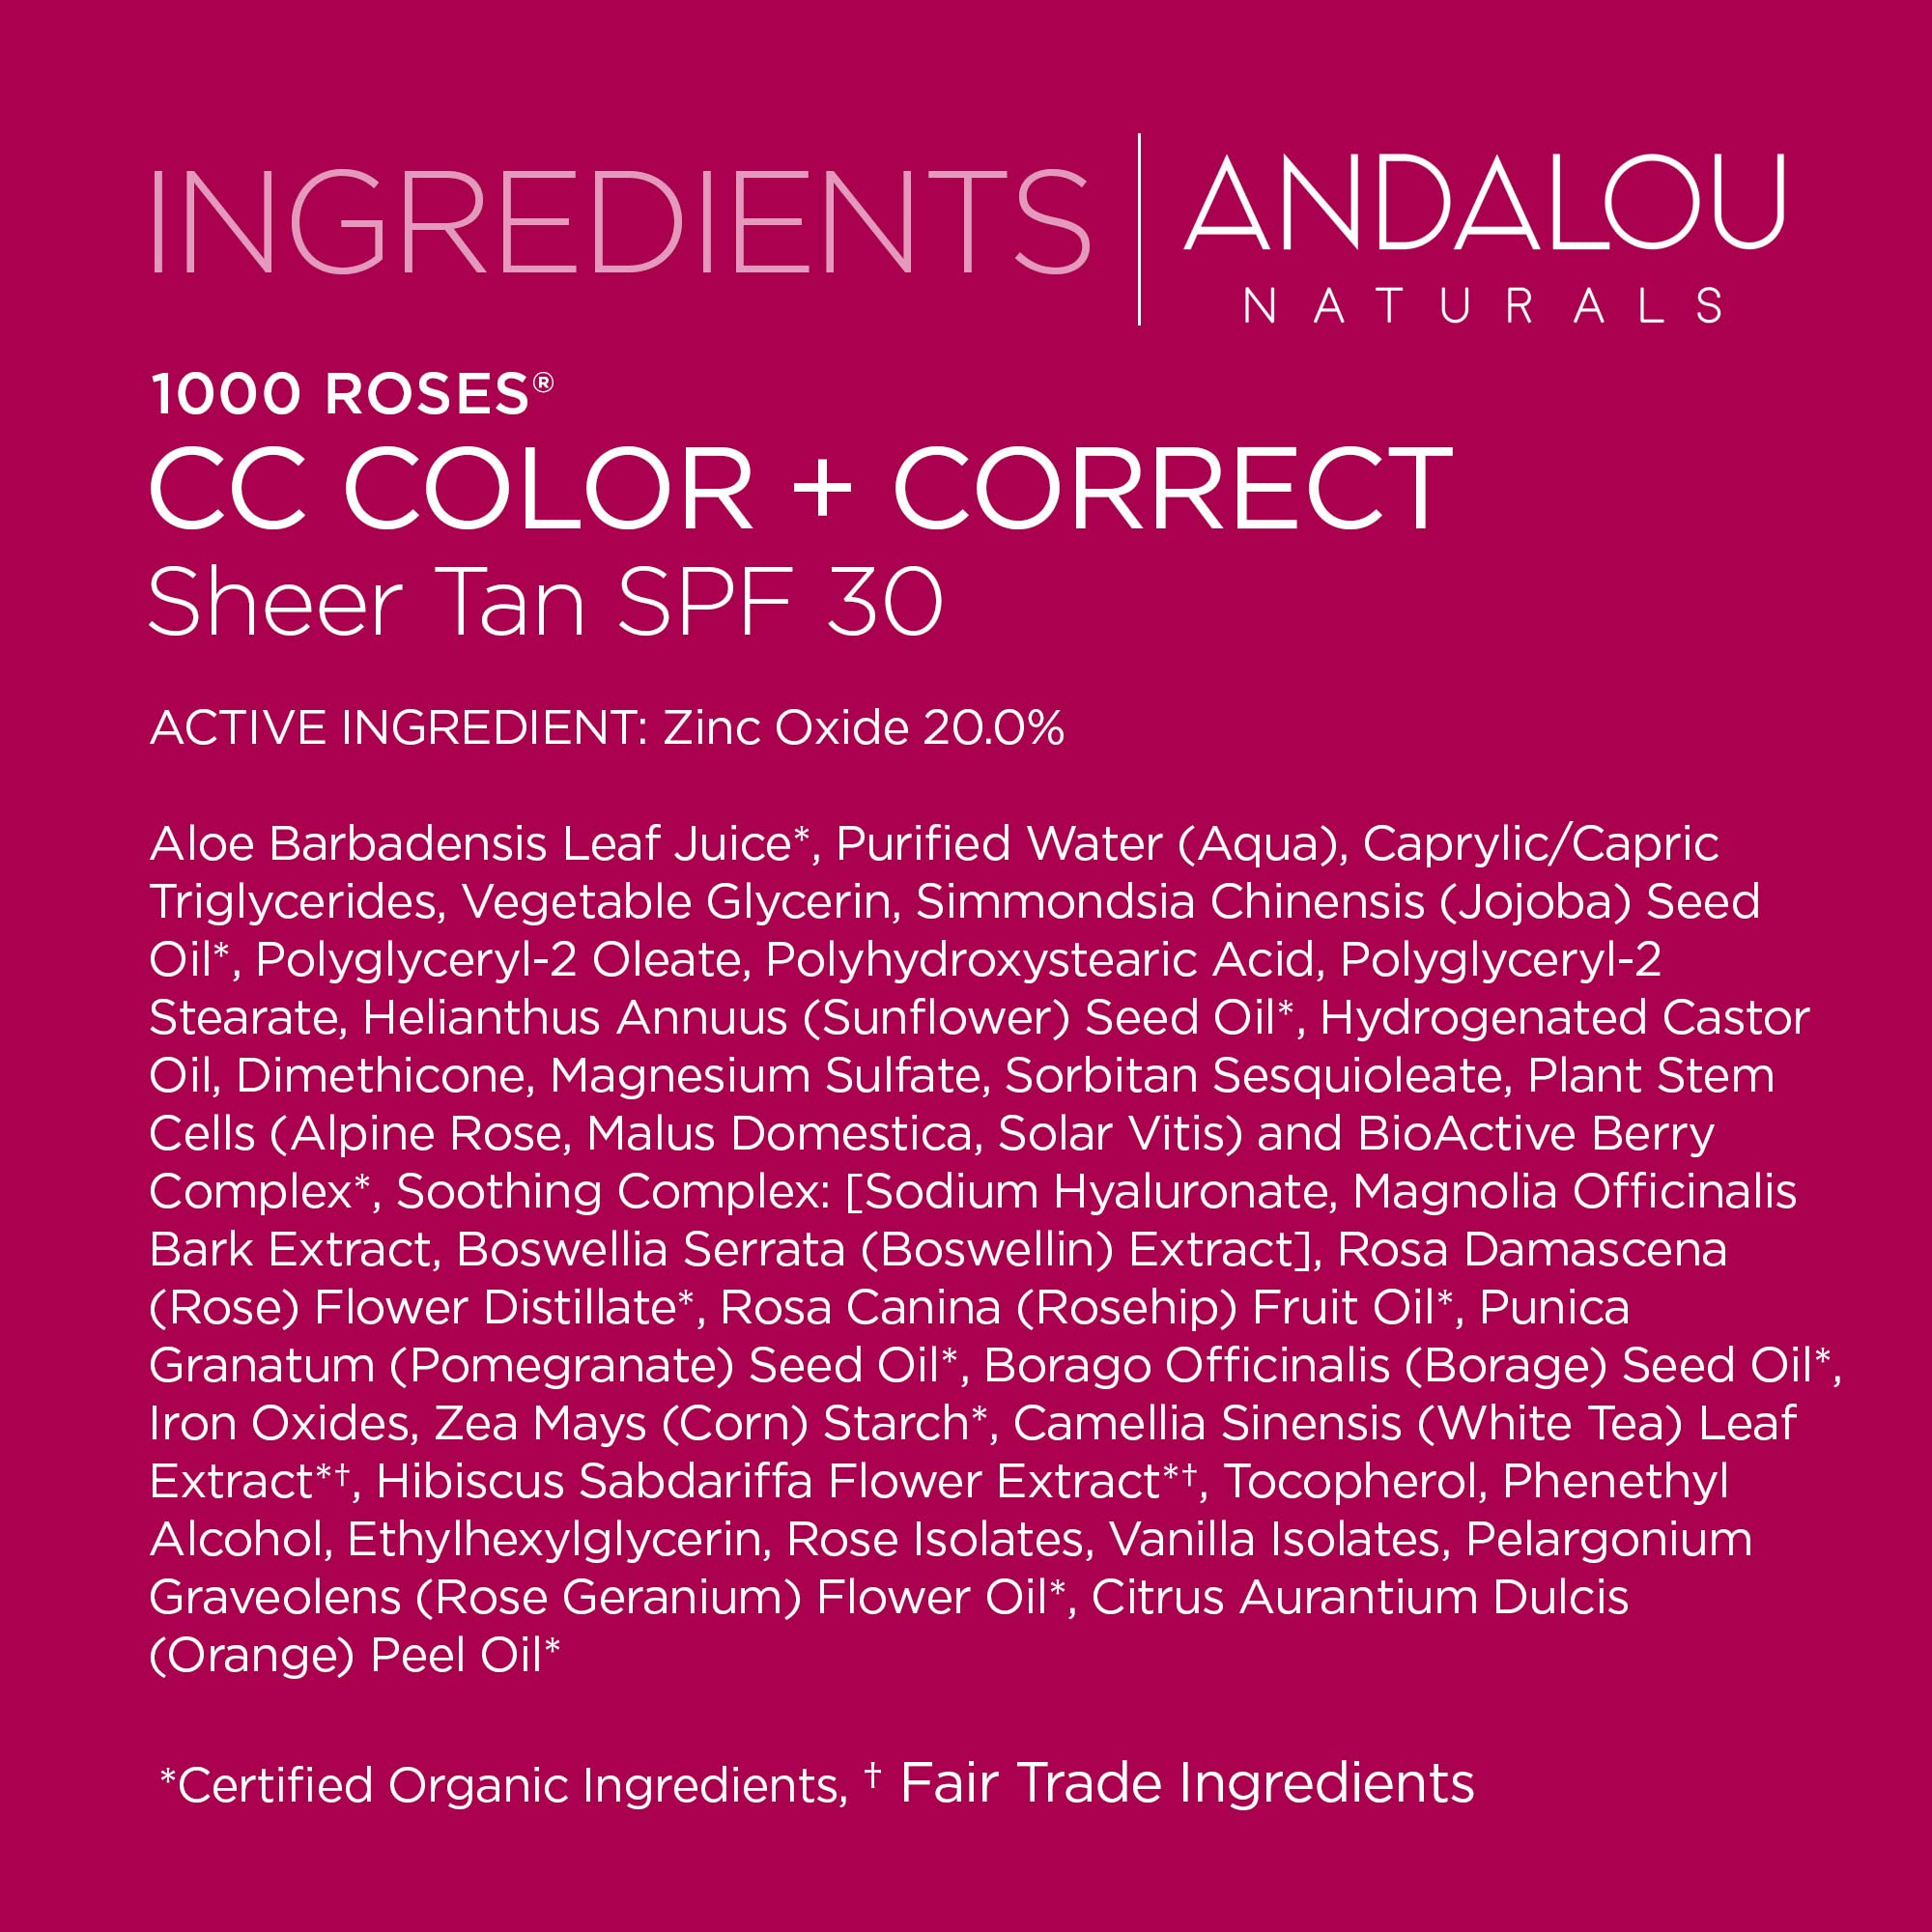 Andalou Naturals 1000 Roses CC Color + Correct with SPF 30, Sheer Tan, 2-in-1 Face Sunscreen + CC Cream for Sensitive Skin, Helps Correct Uneven Skin Tone, Reef Safe Sunscreen, 2 Fl Oz